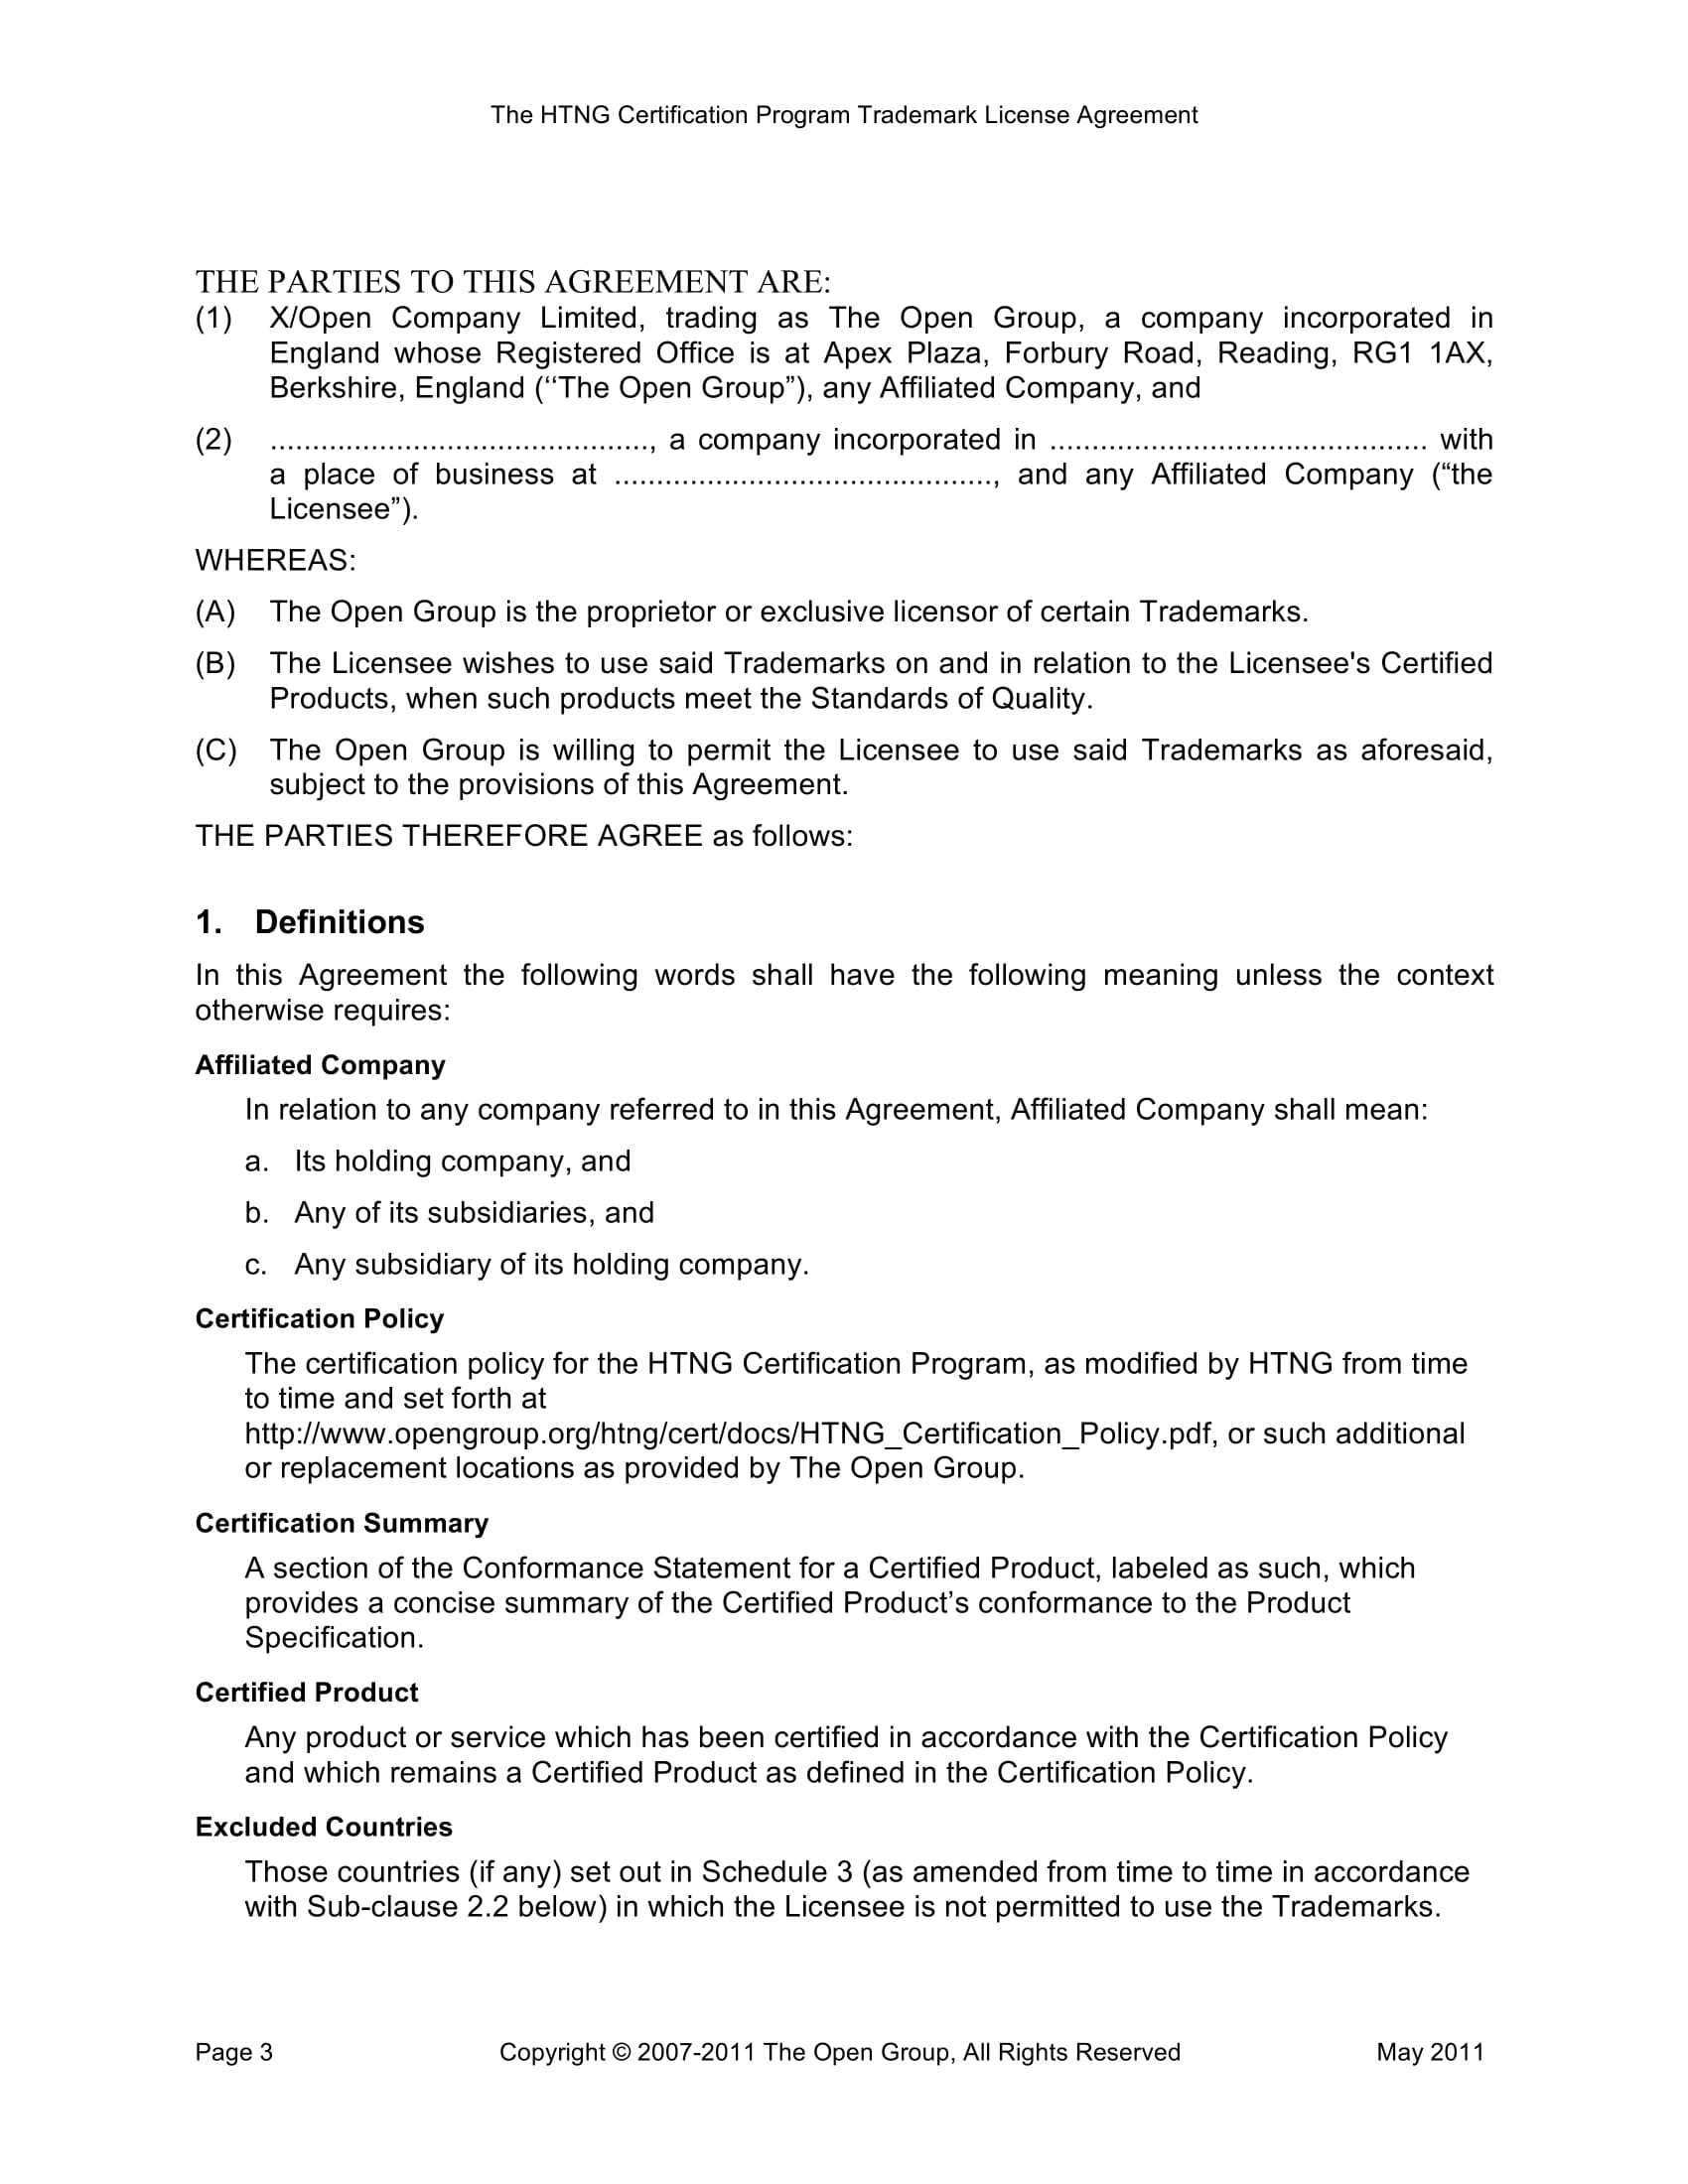 trademark license agreement sample form 03